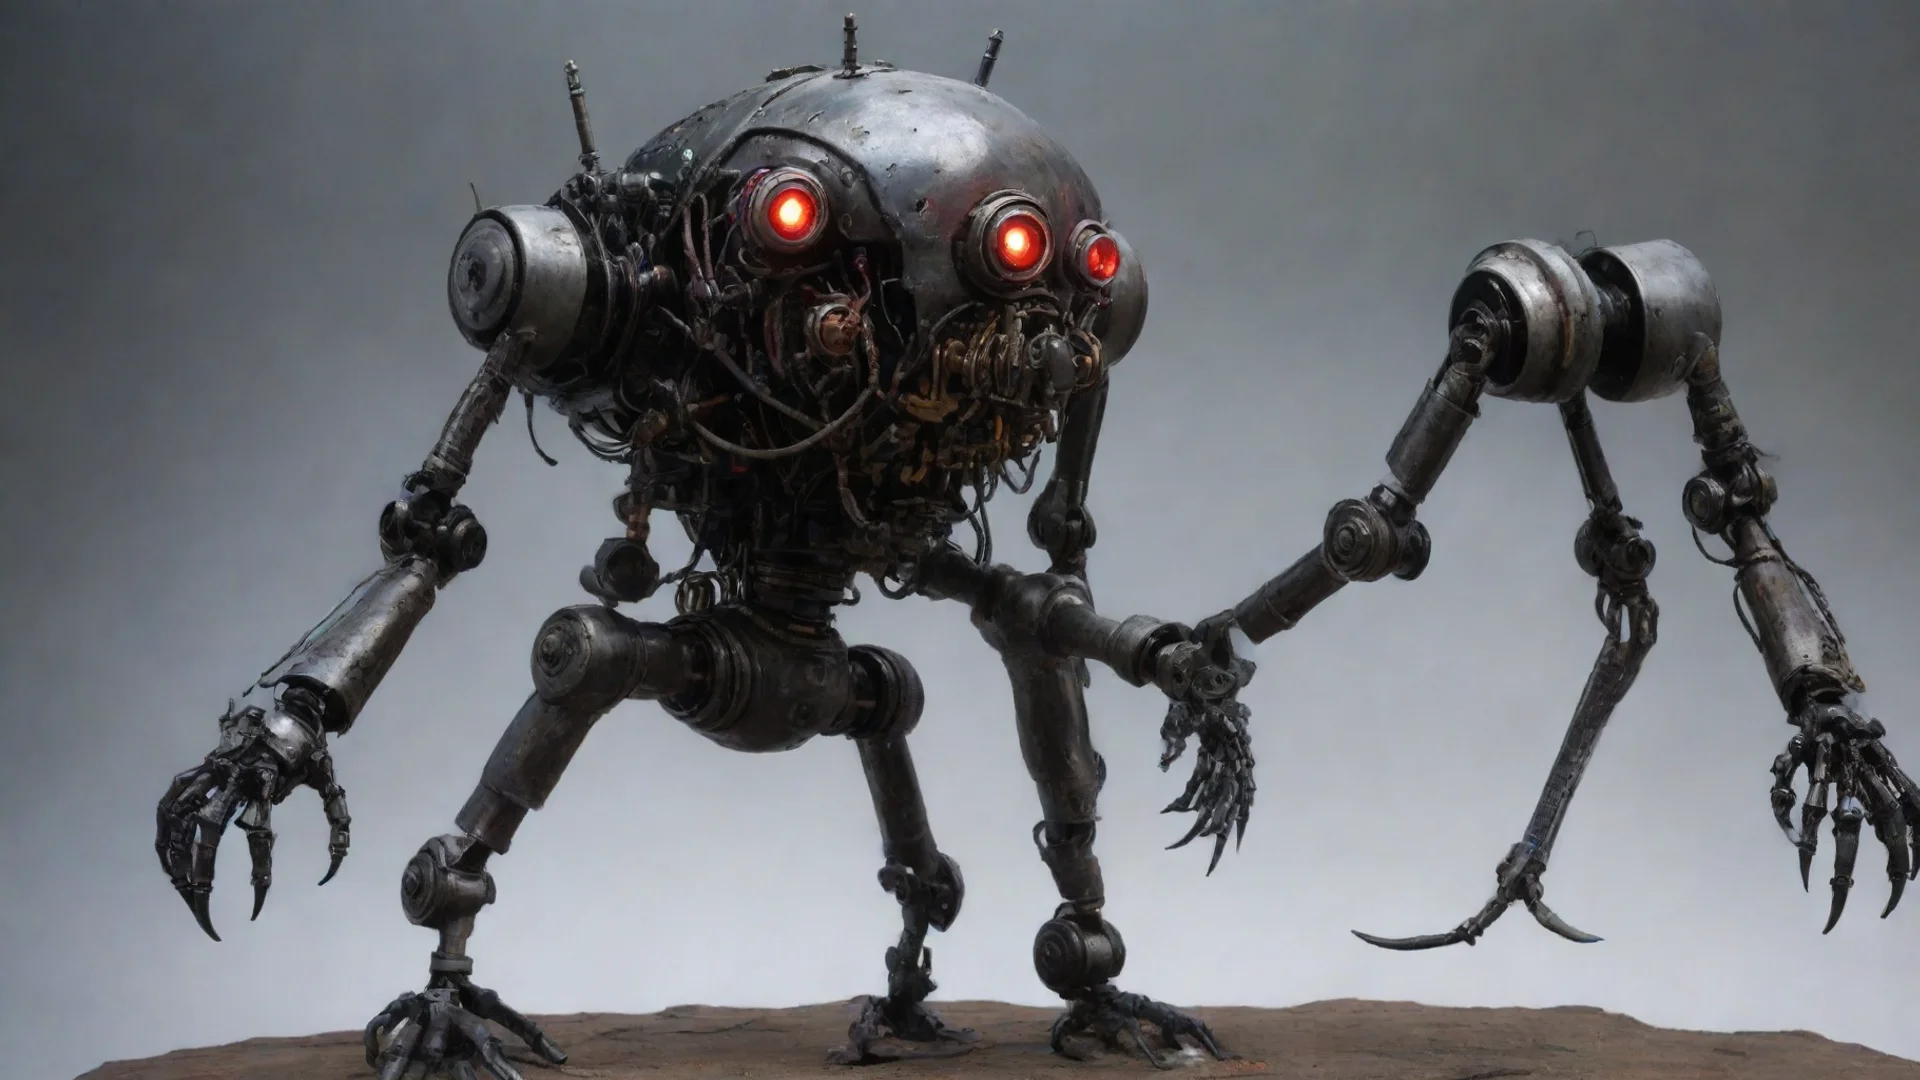 artstation art grimdark aetherophasic engine powered evil robot confident engaging wow 3 wide